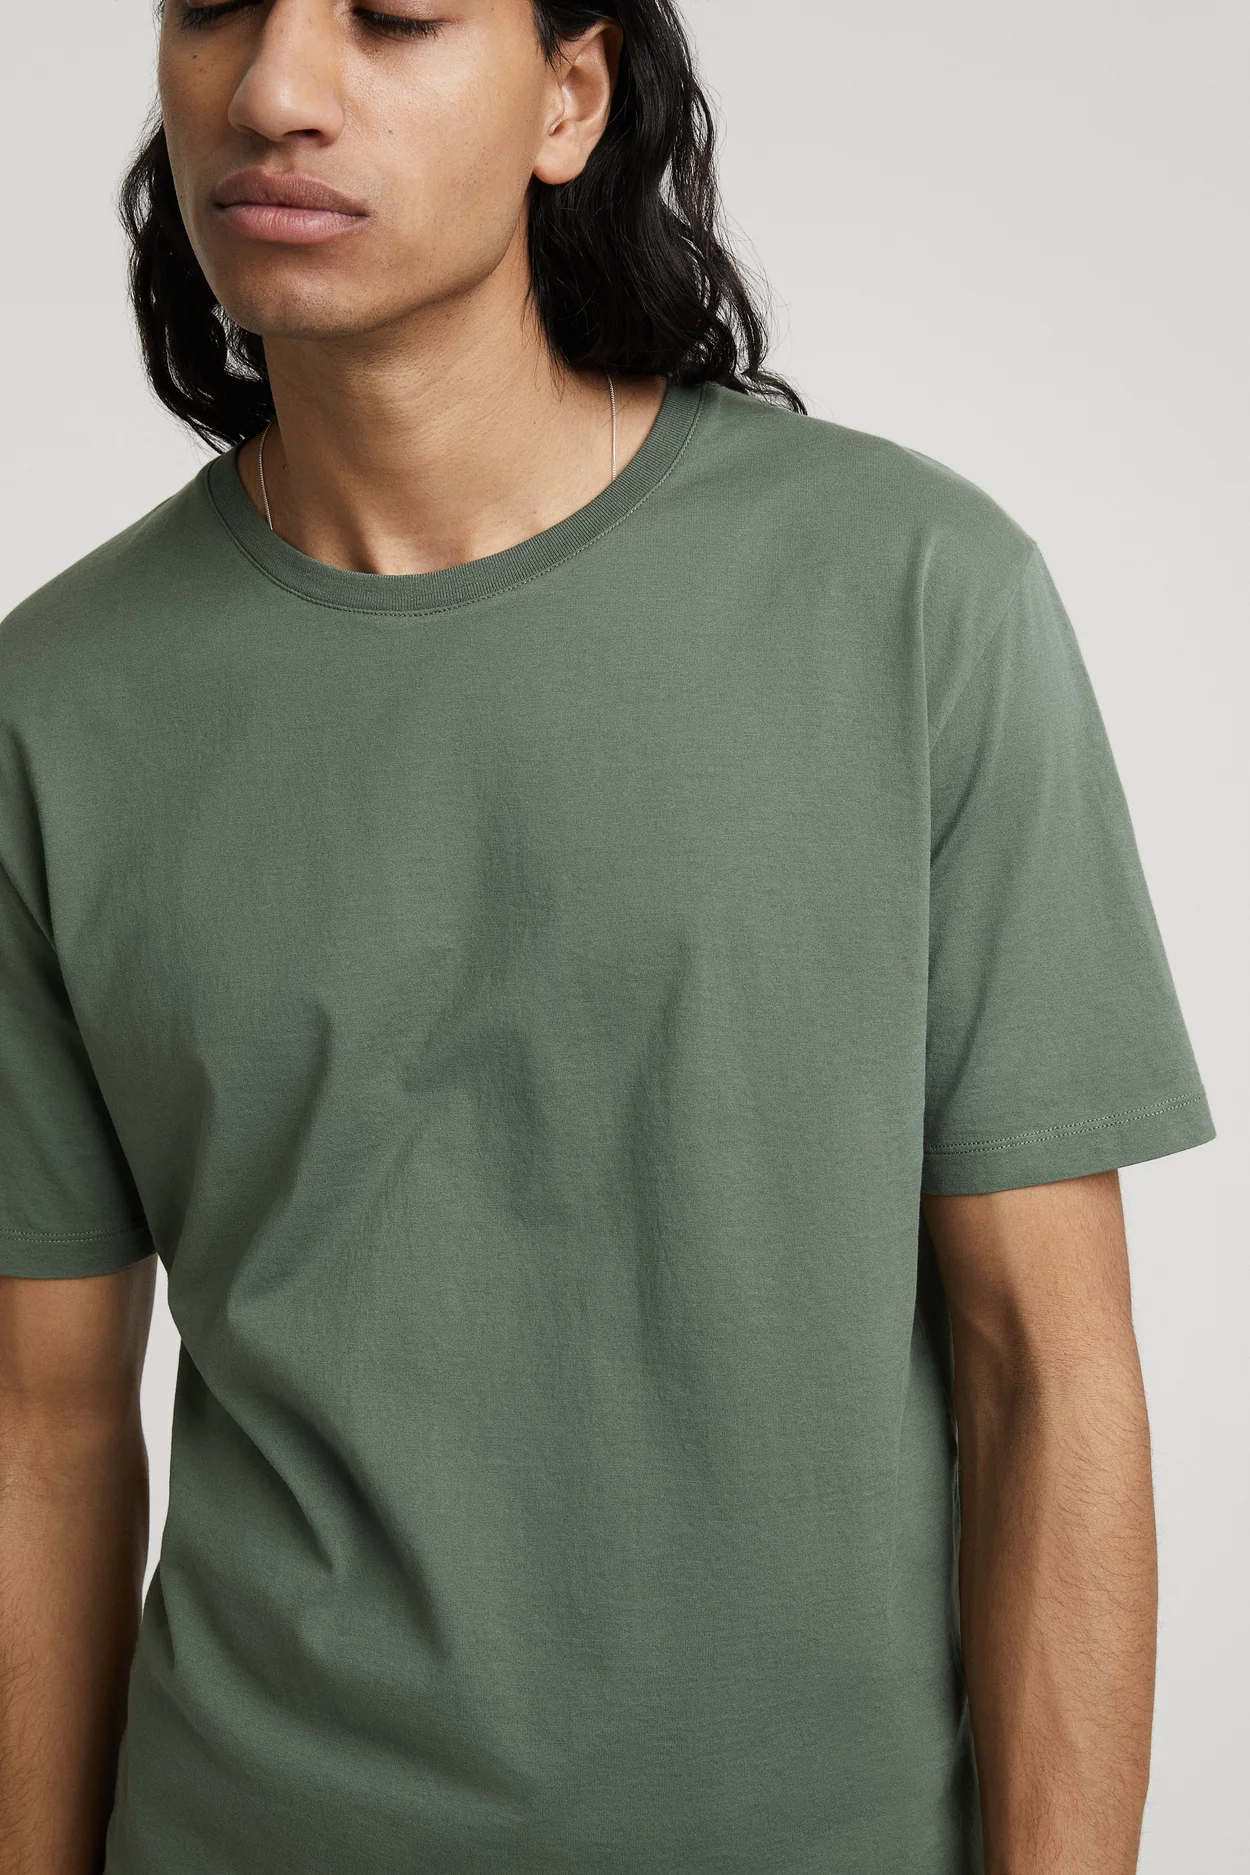 Men's T-Shirts  Egyptian Cotton T-shirts, Piques & Long Sleeves